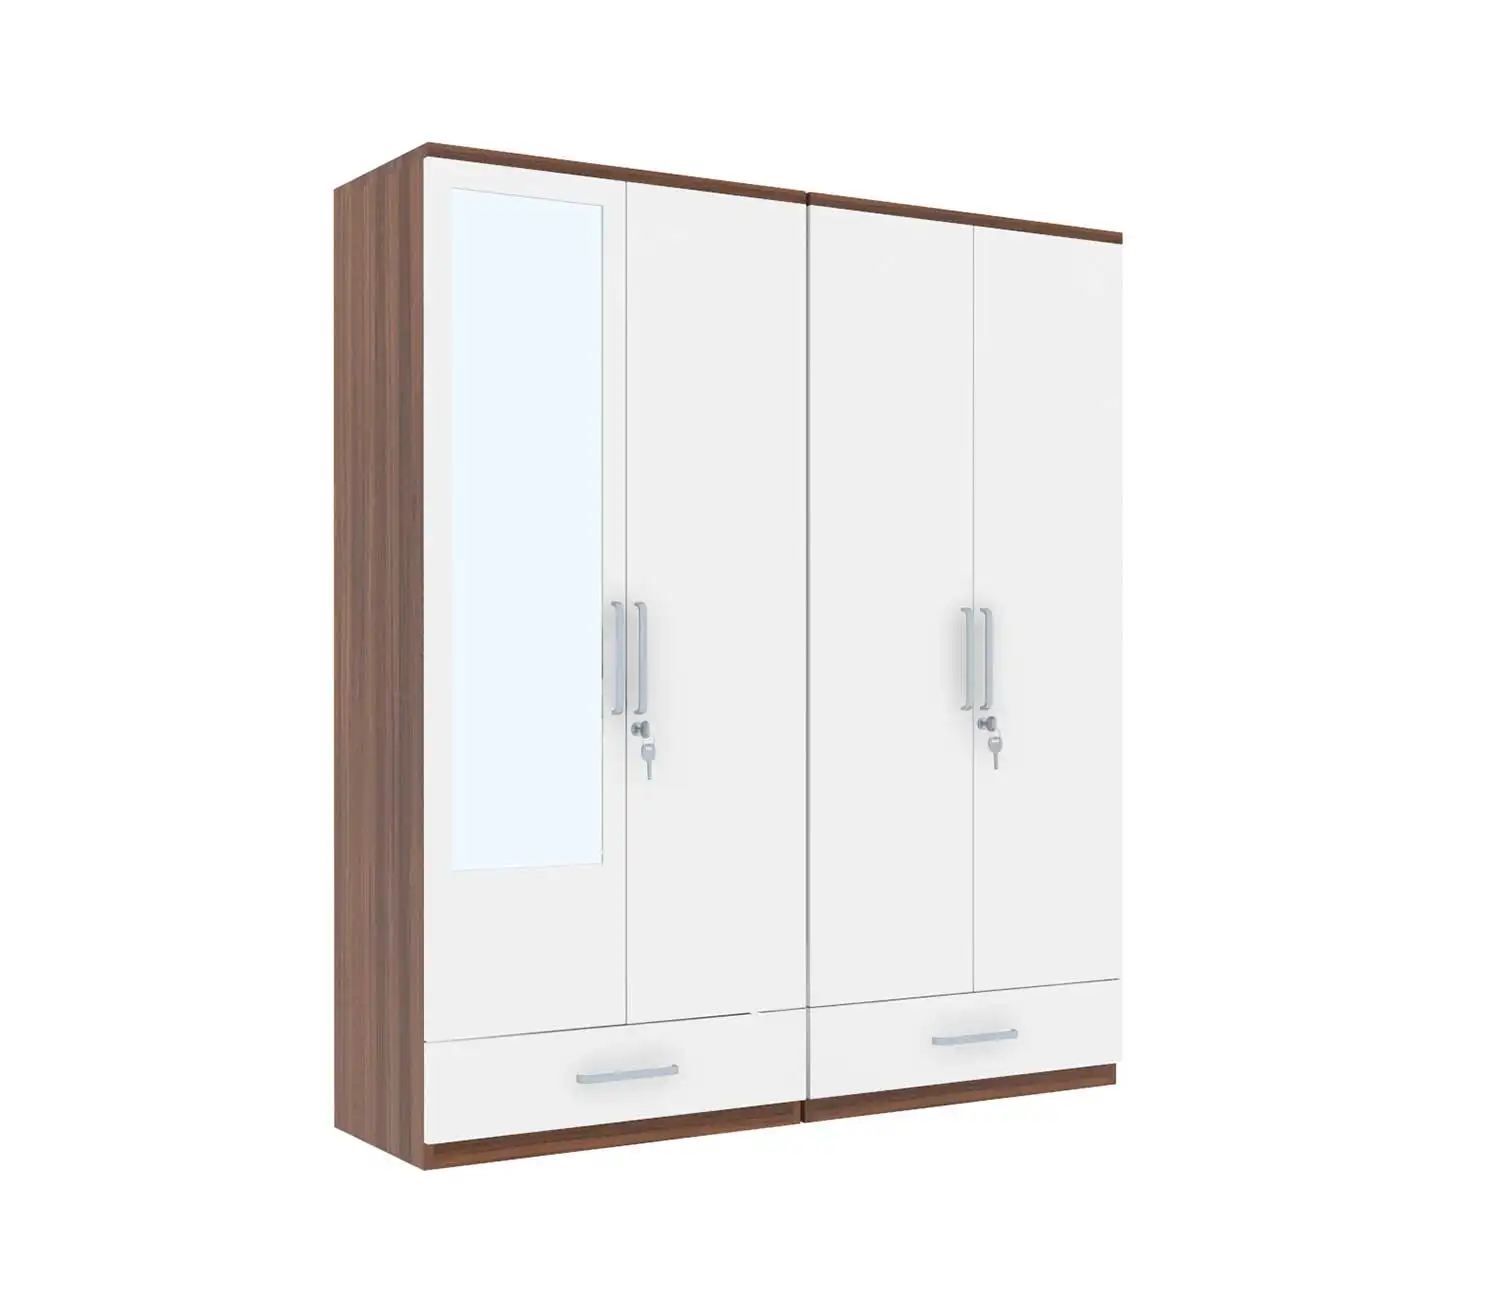 XIYATECH Customizable Simple Industrial Mirrored Highgloss Bedroom Wardrobe Wooden Wardrobe Cabinet